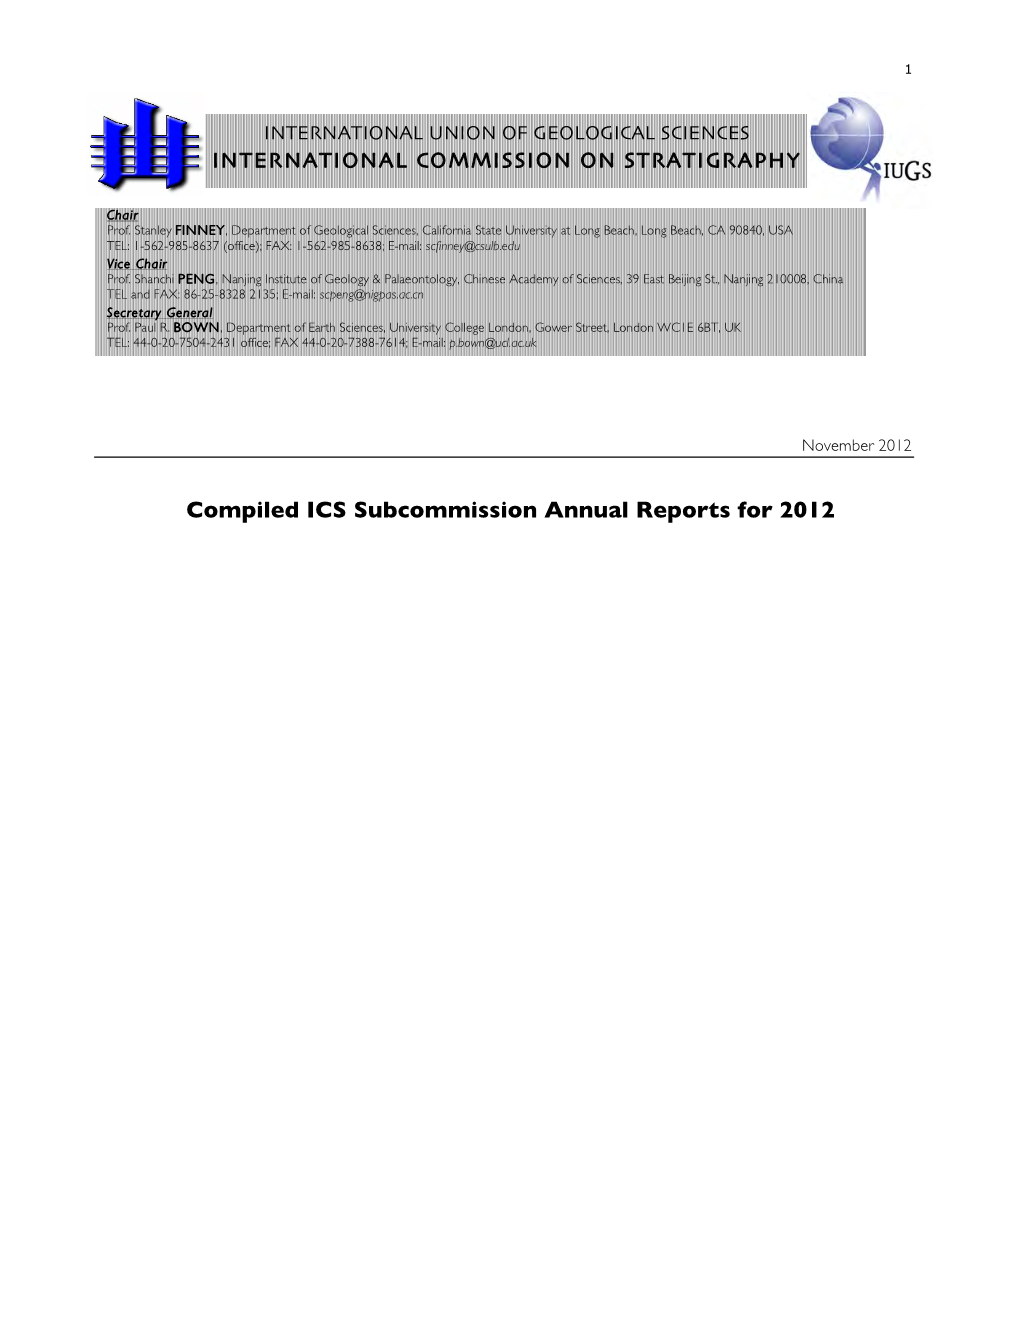 ICS Subcommission Annual Report 2012